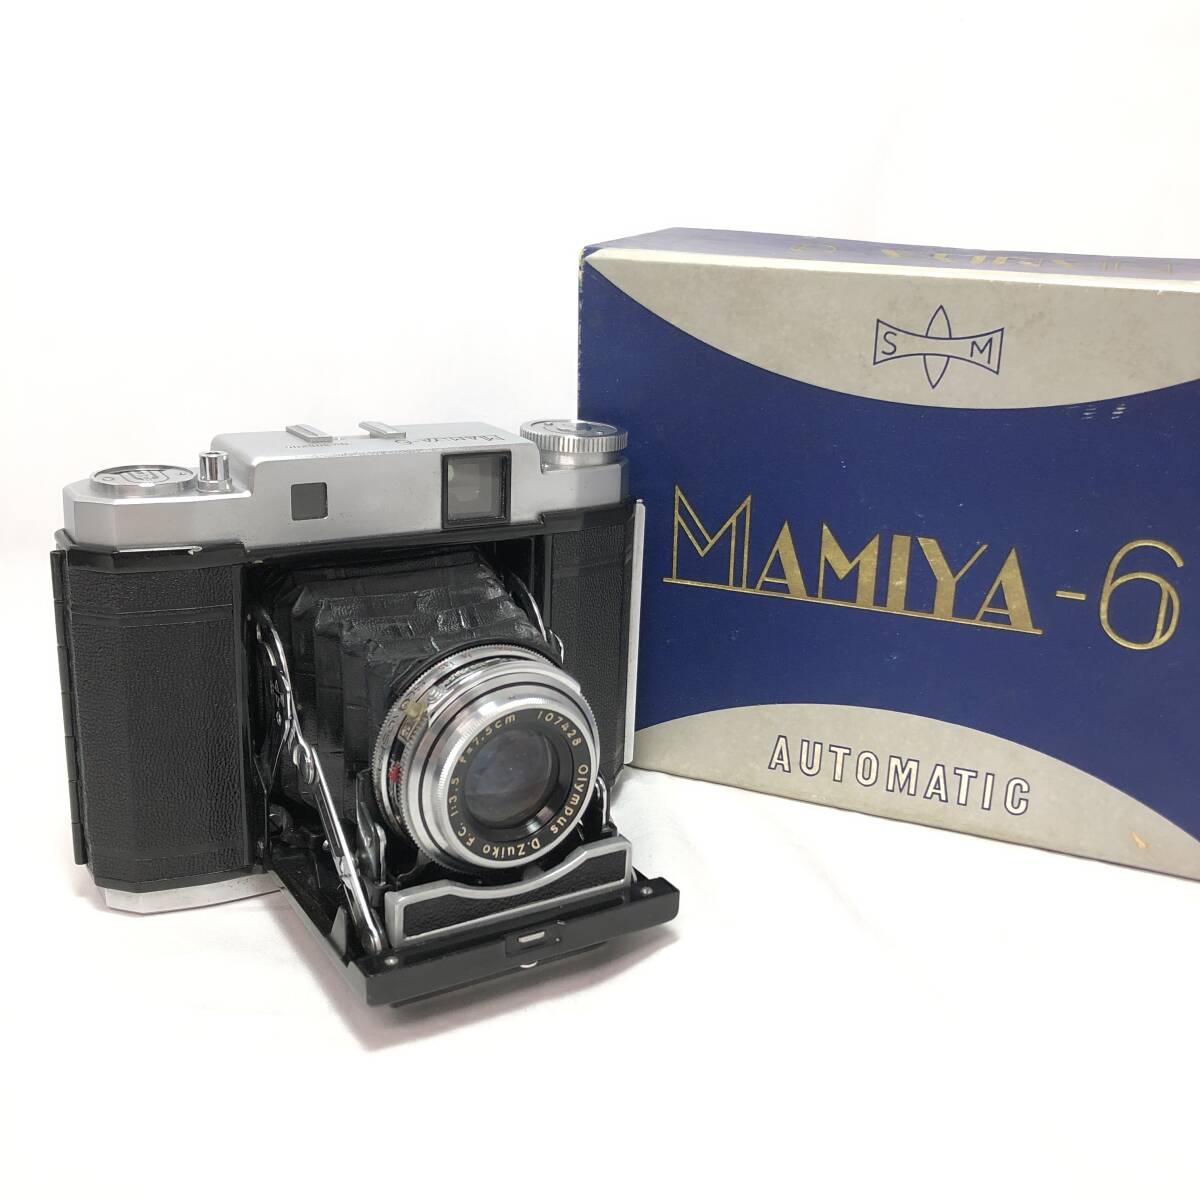 Yahoo!オークション - ▽マミヤ MAMIYA-6 蛇腹カメラ フィルムカメラ o...